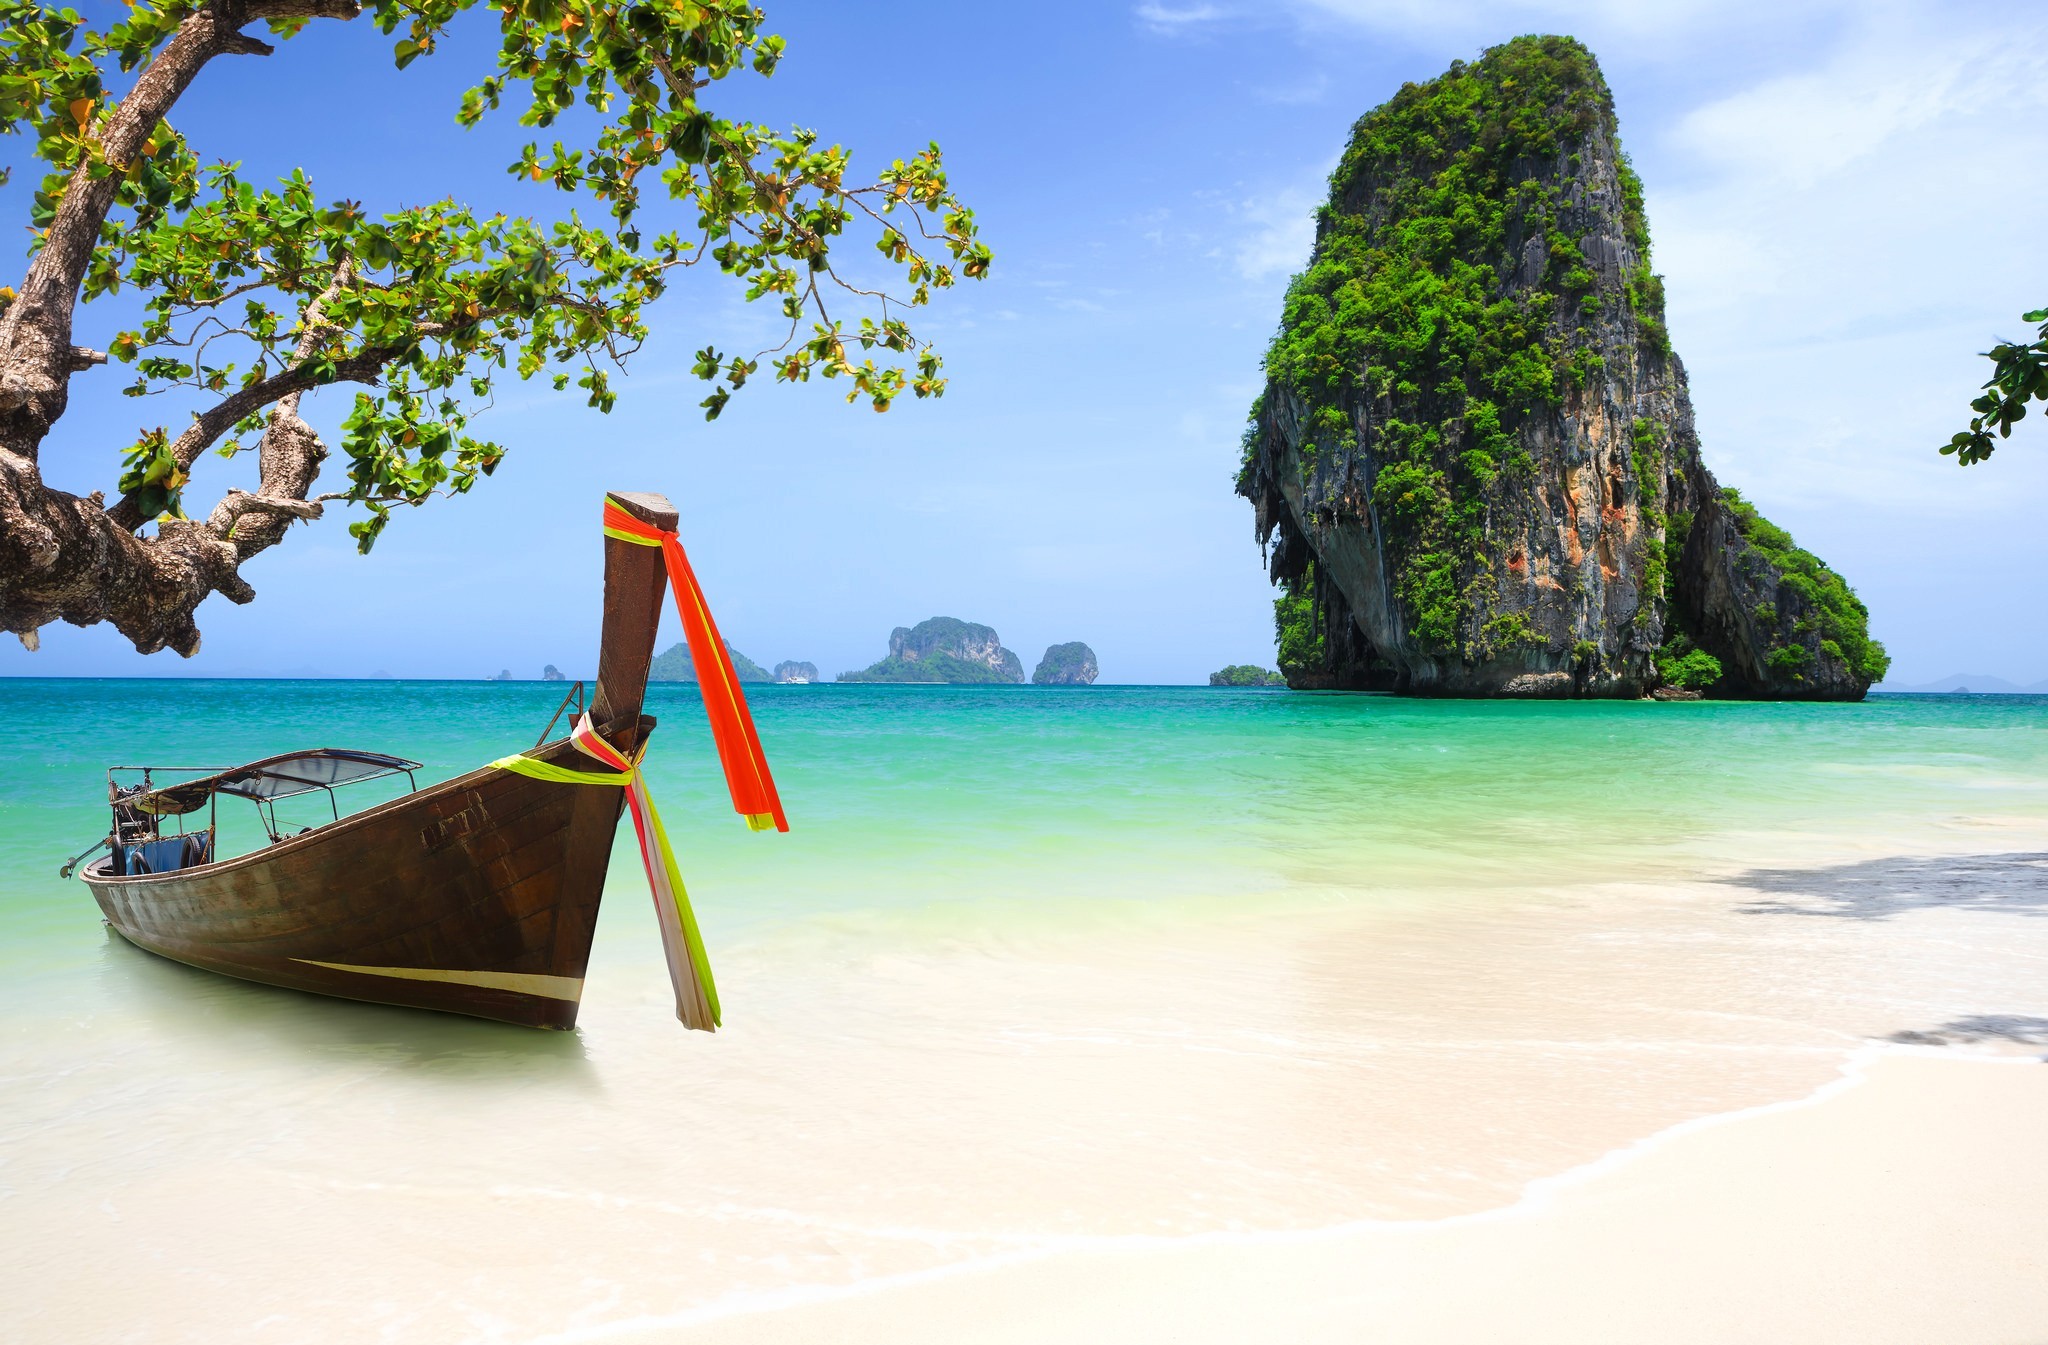 656216 descargar imagen phuket, tailandia, fotografía, tropico, playa, barco, acantilado, laguna, arena, zona tropical: fondos de pantalla y protectores de pantalla gratis